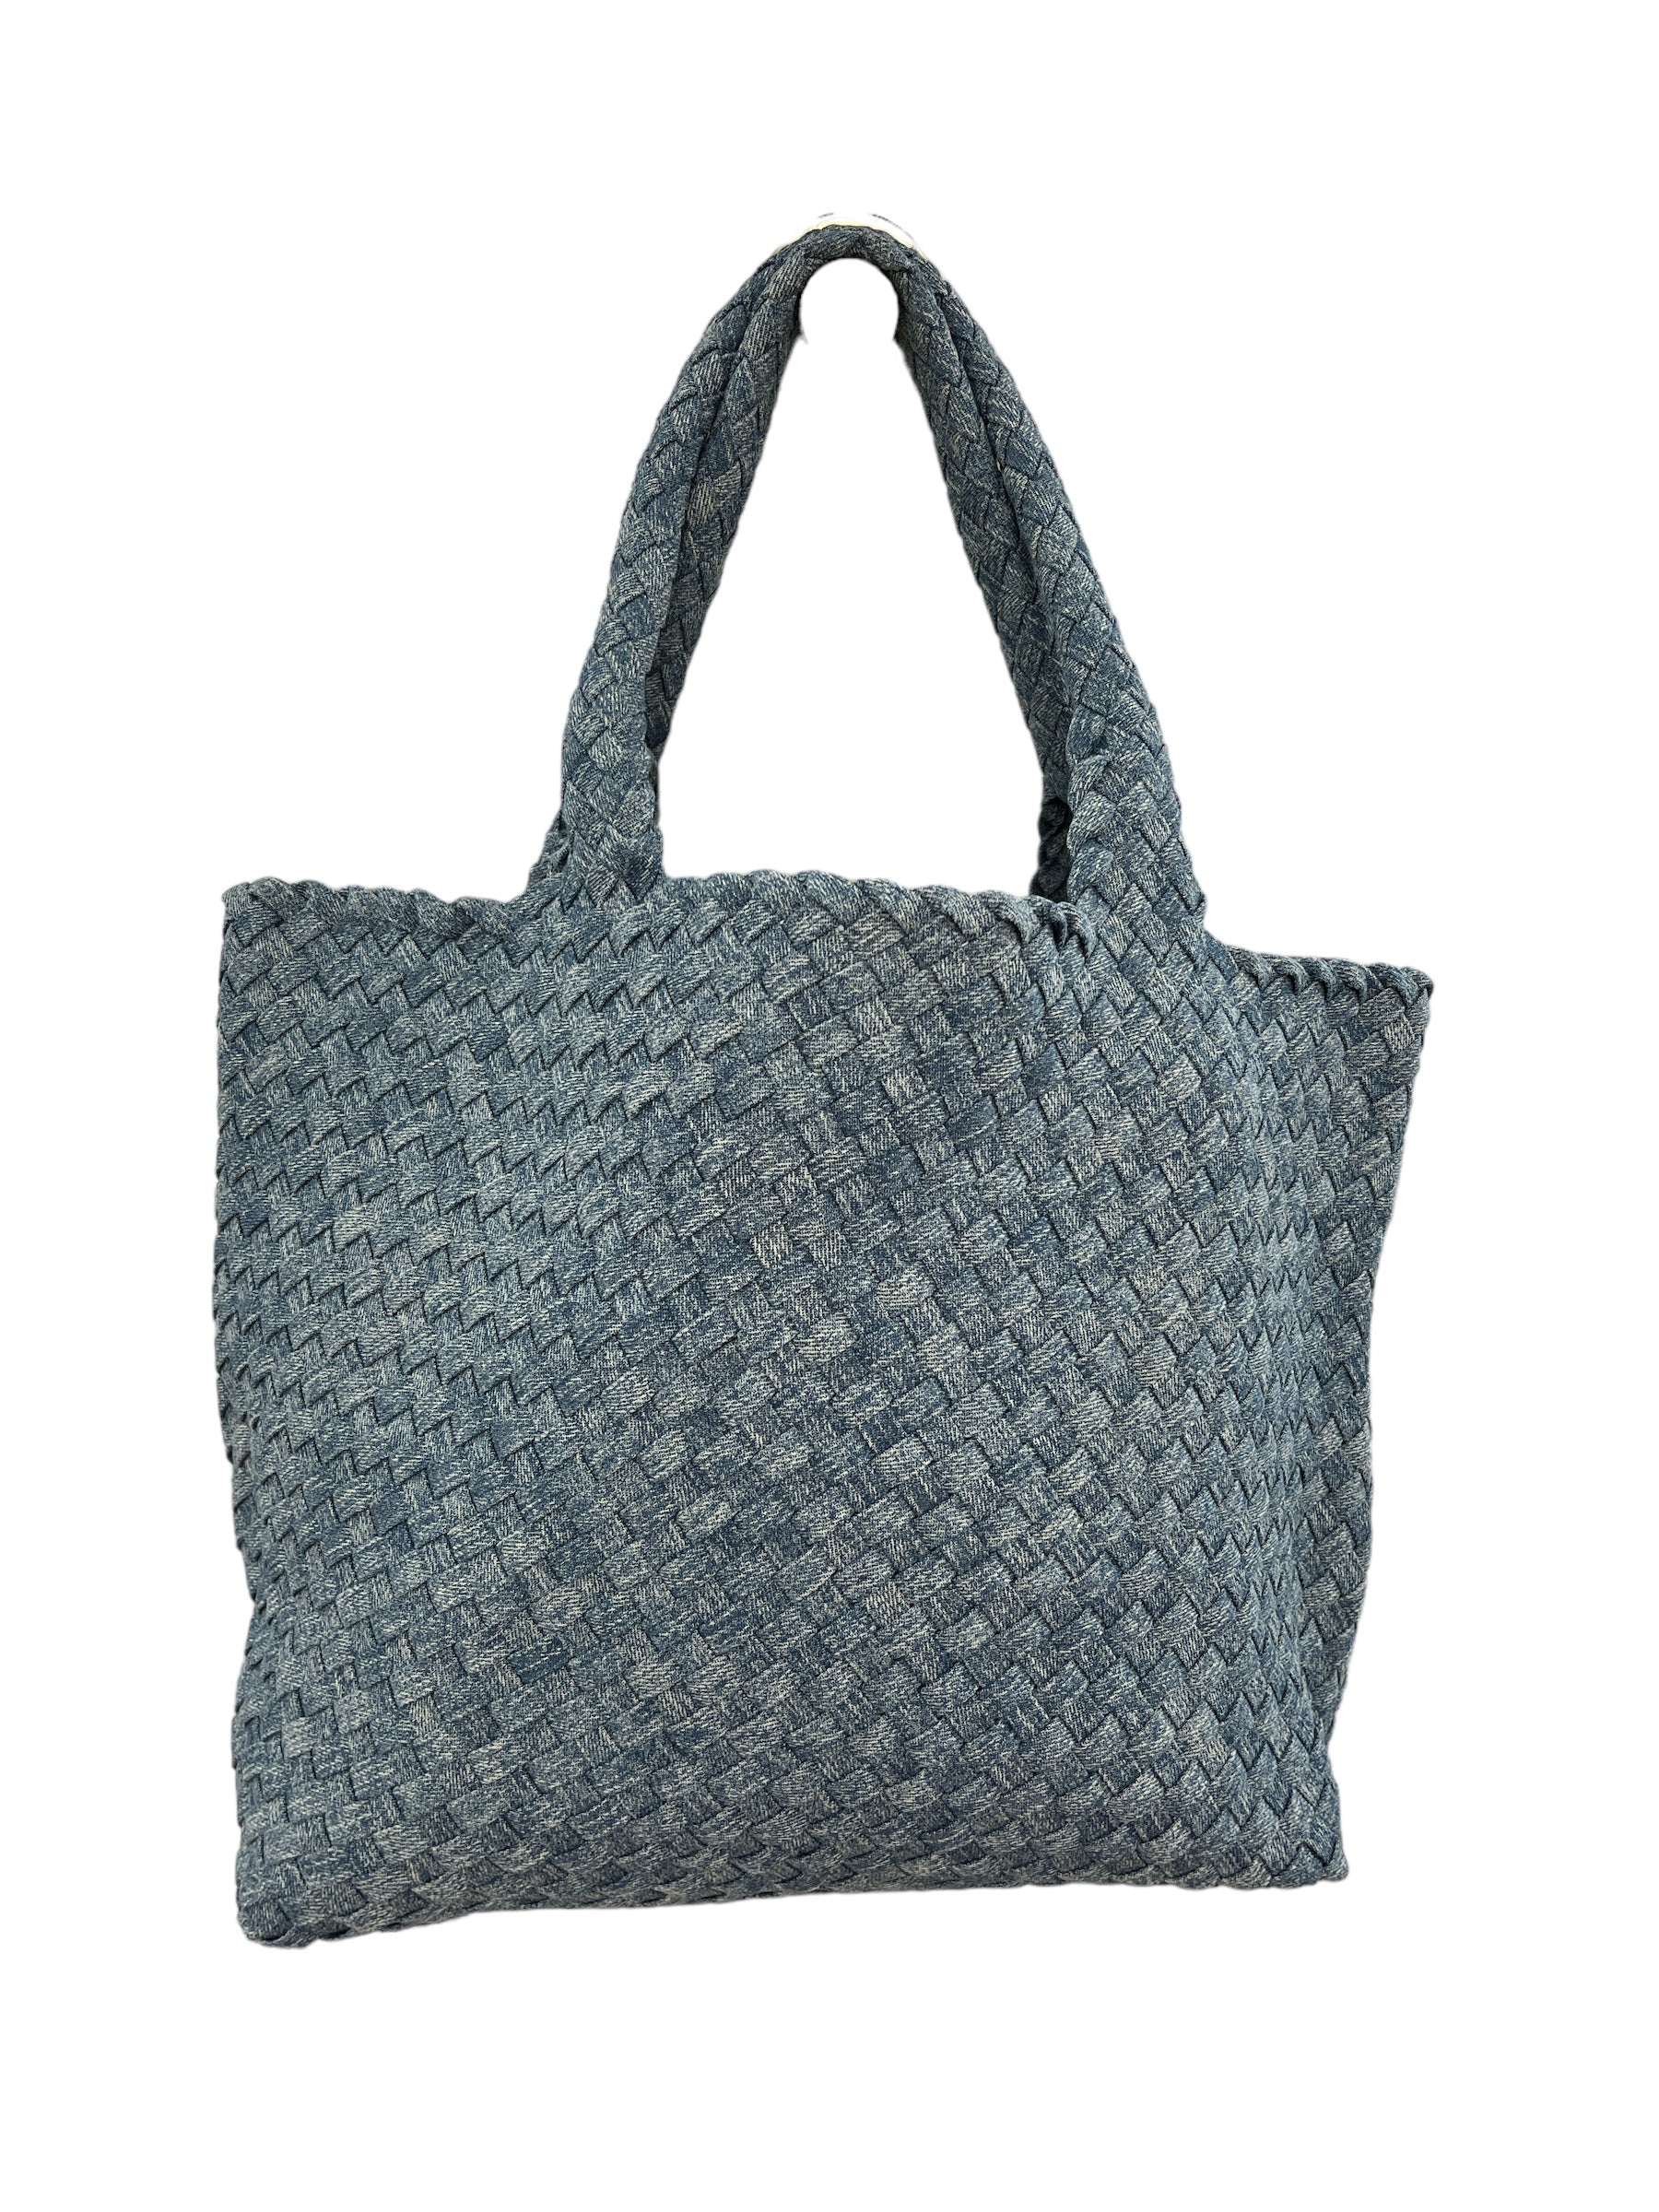 Bc Handbags | Weave Handbag